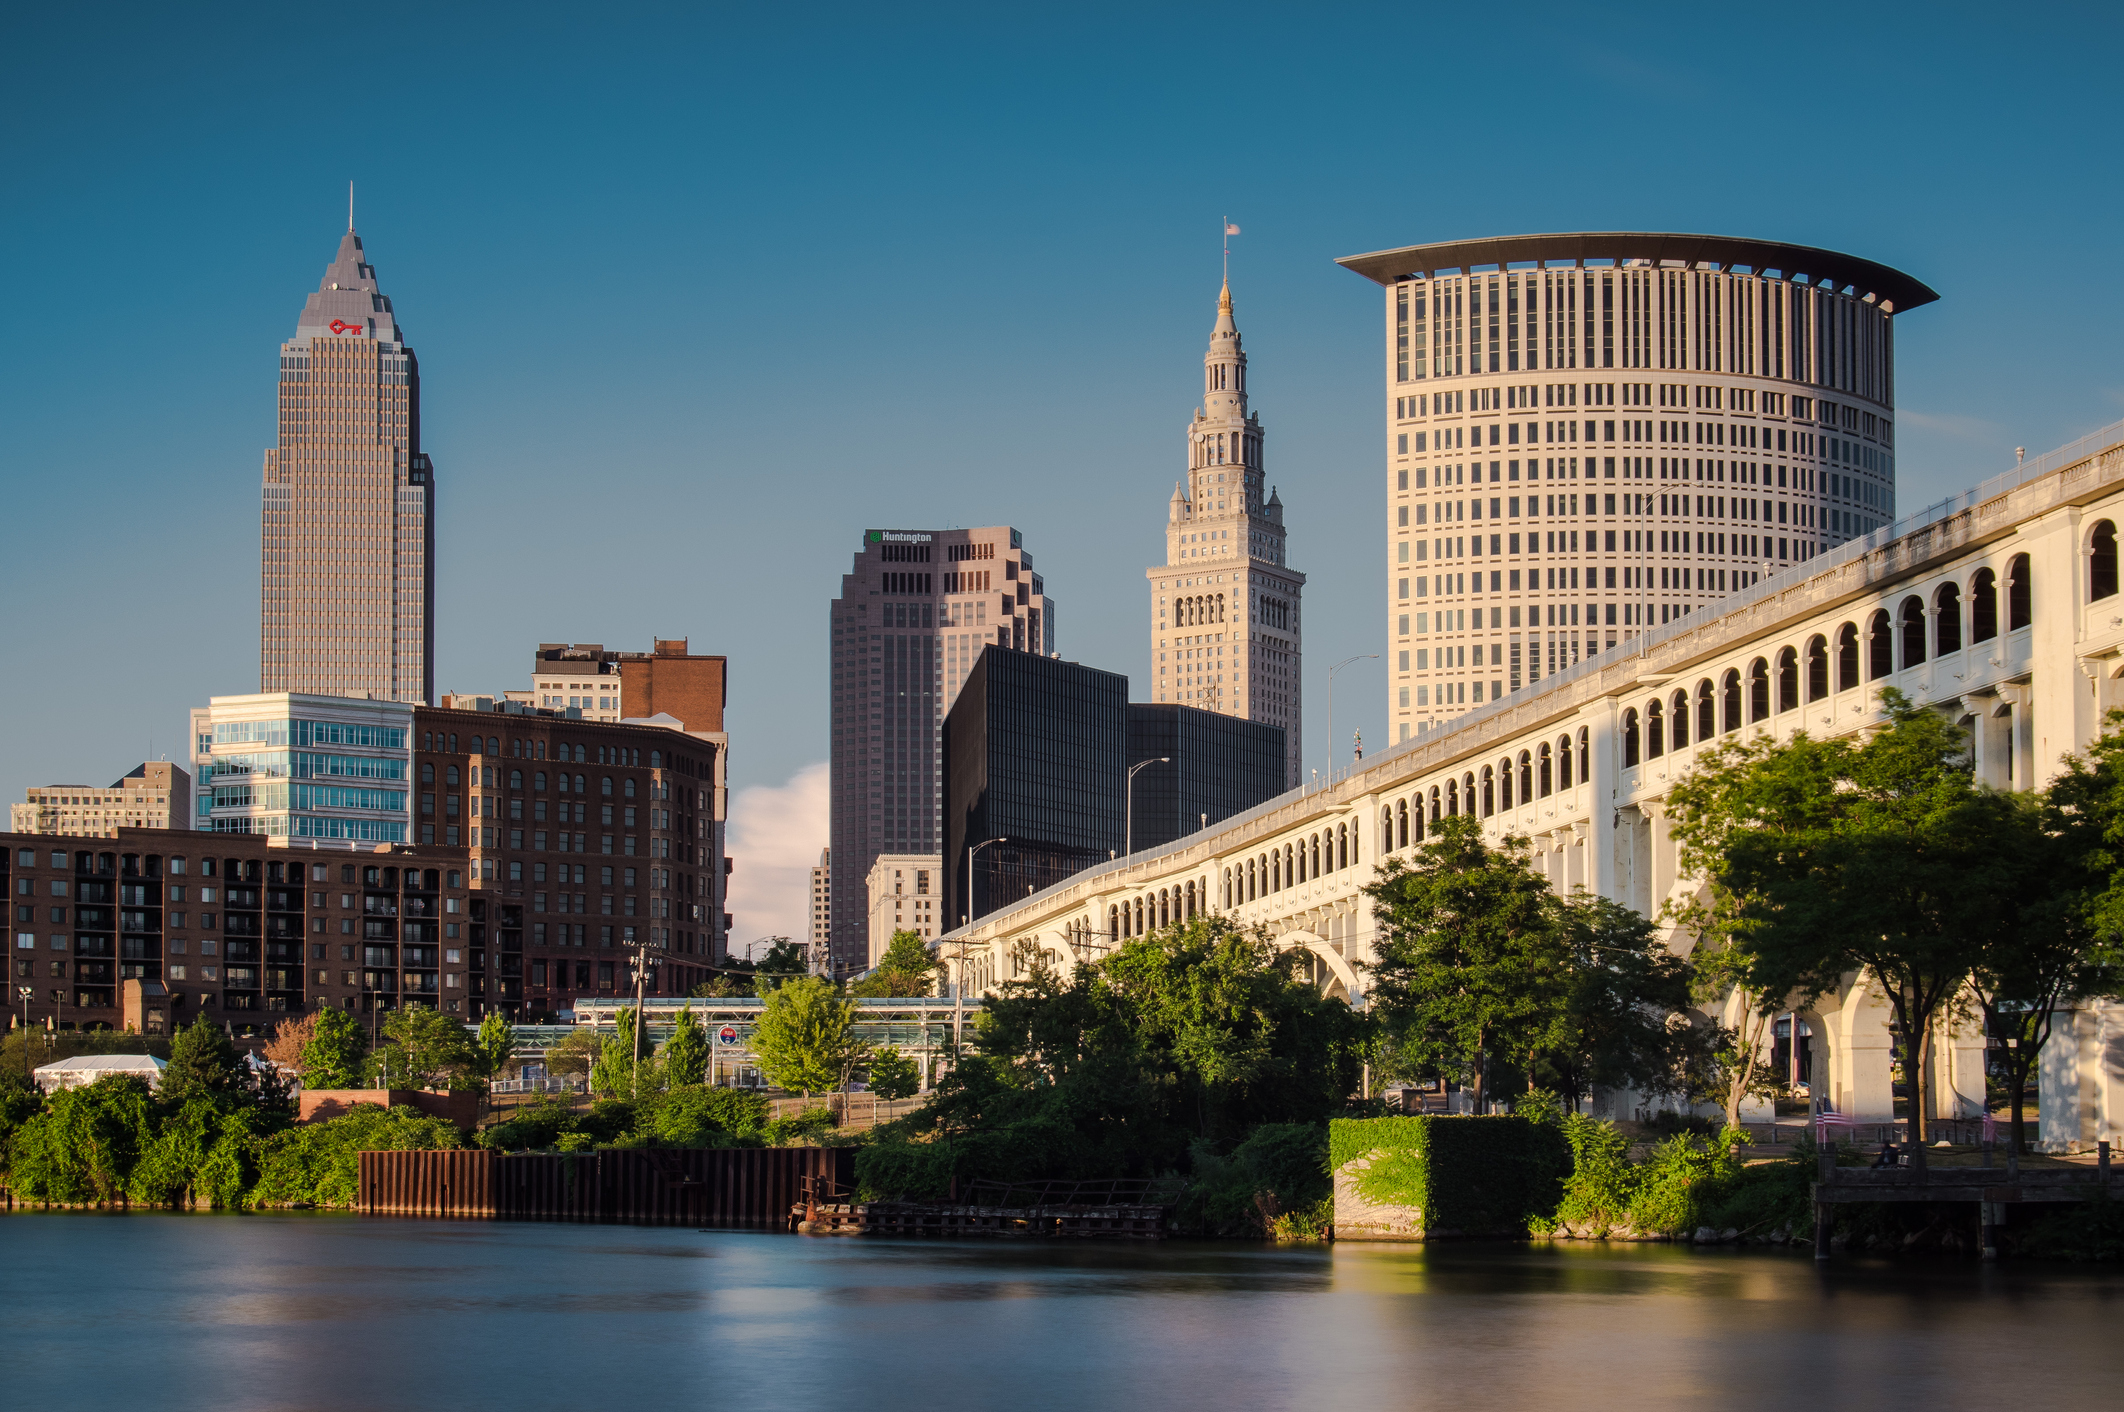 the Cleveland skyline